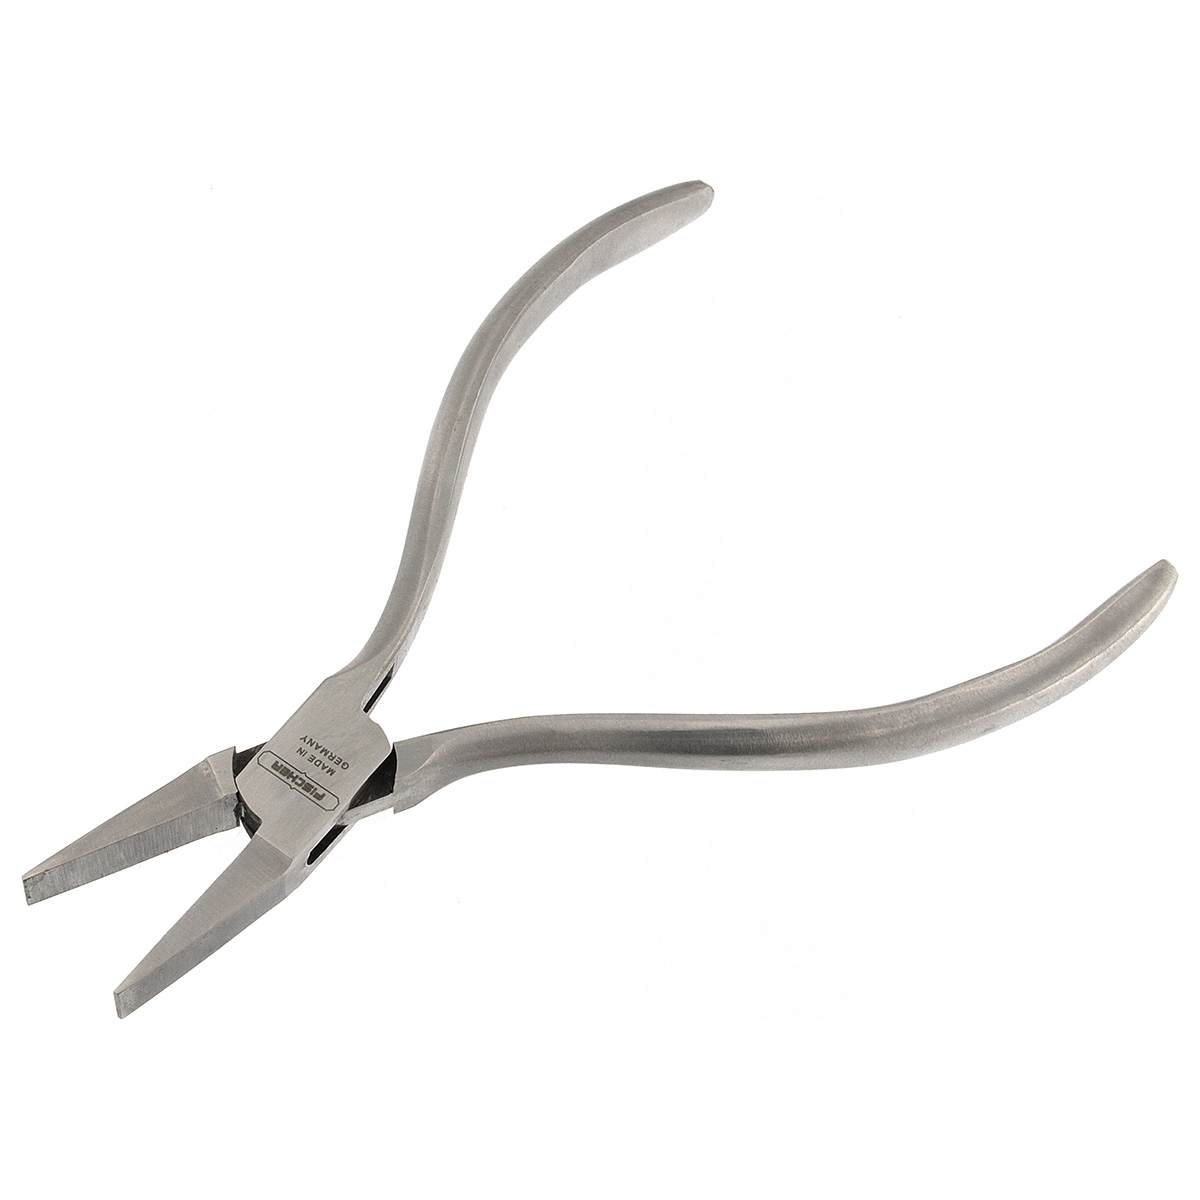 Flat nose pliers, length 130 mm